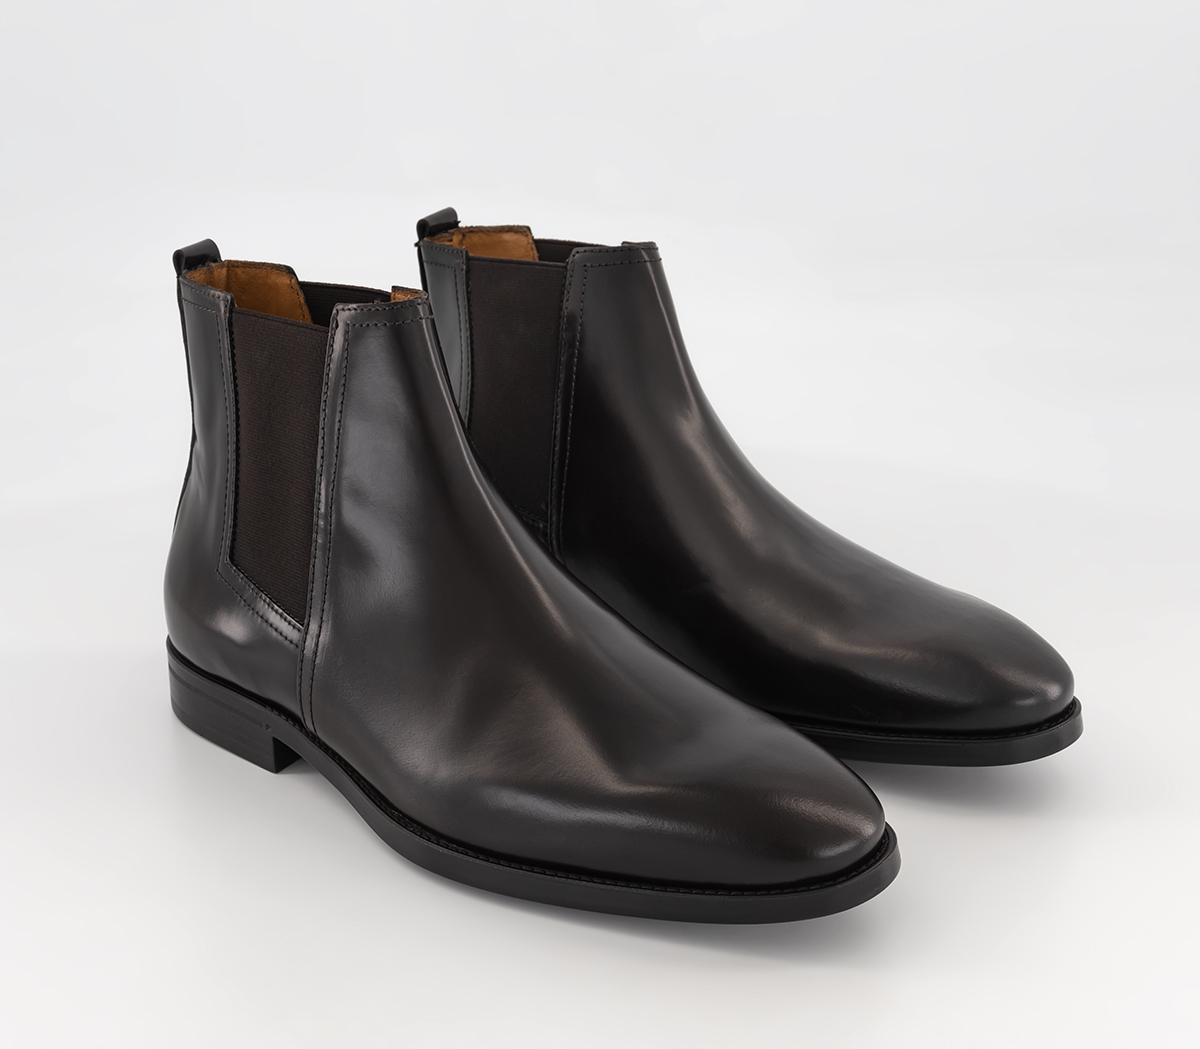 Poste Peterson Chelsea Boots Brown Leather - Men’s Boots